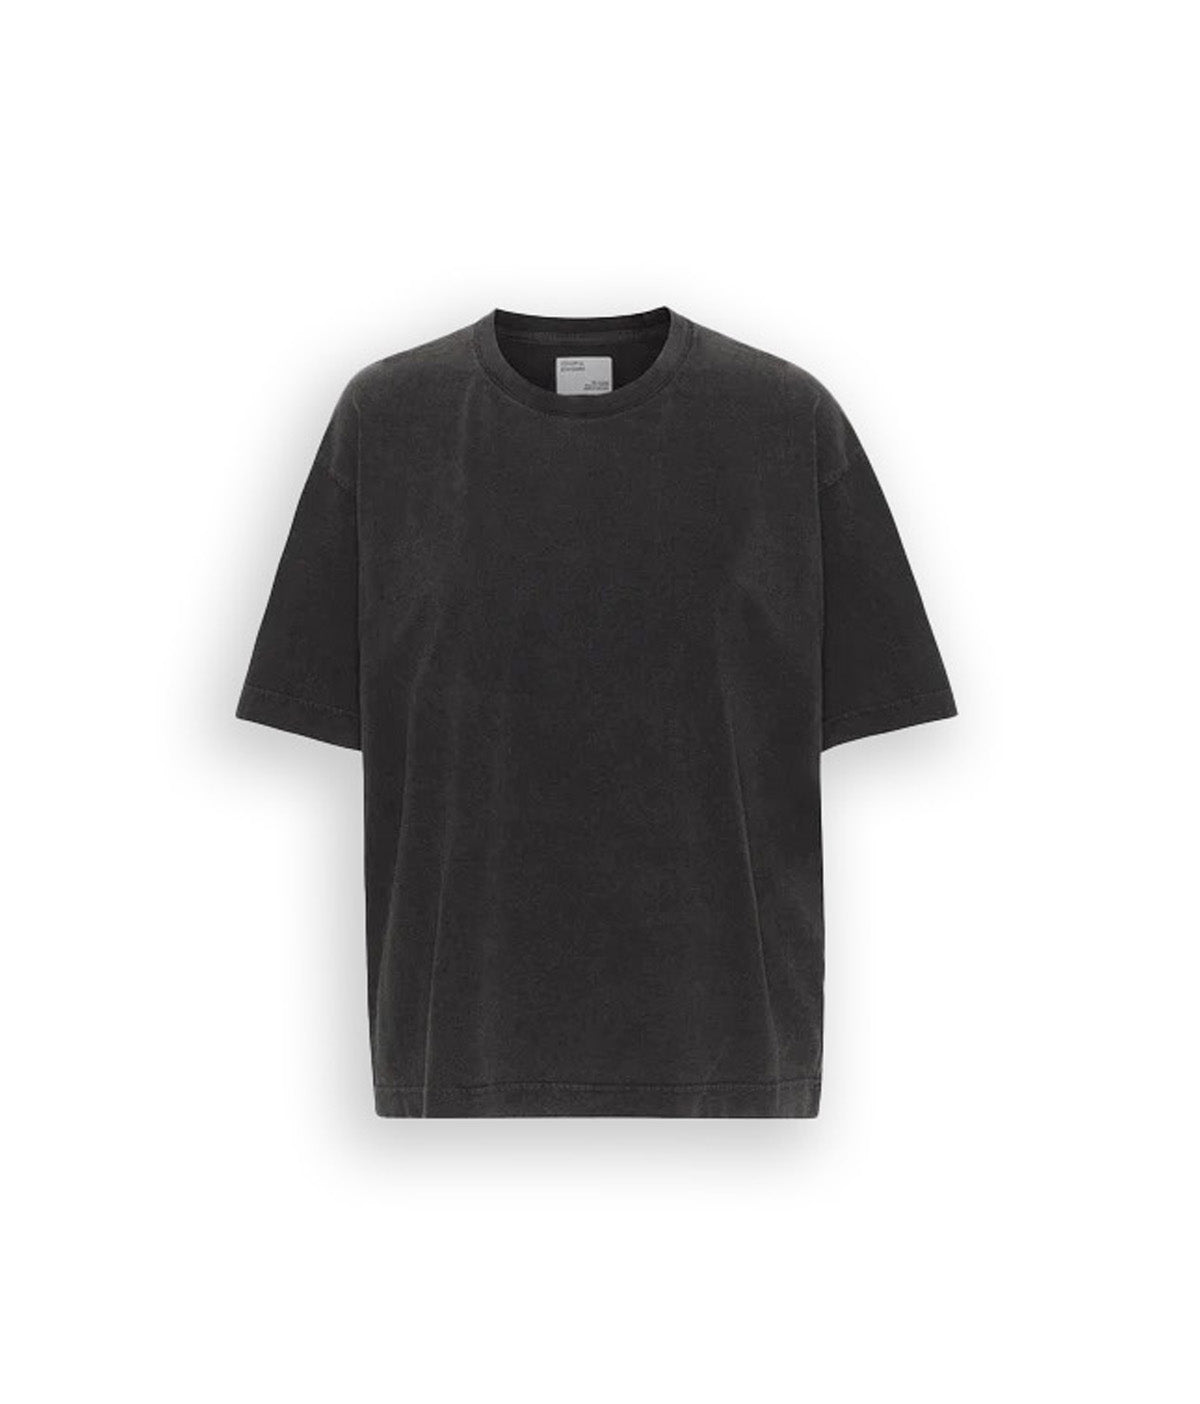 Oversized Colorful Standard T-Shirt Organic Cotton Black Unisex